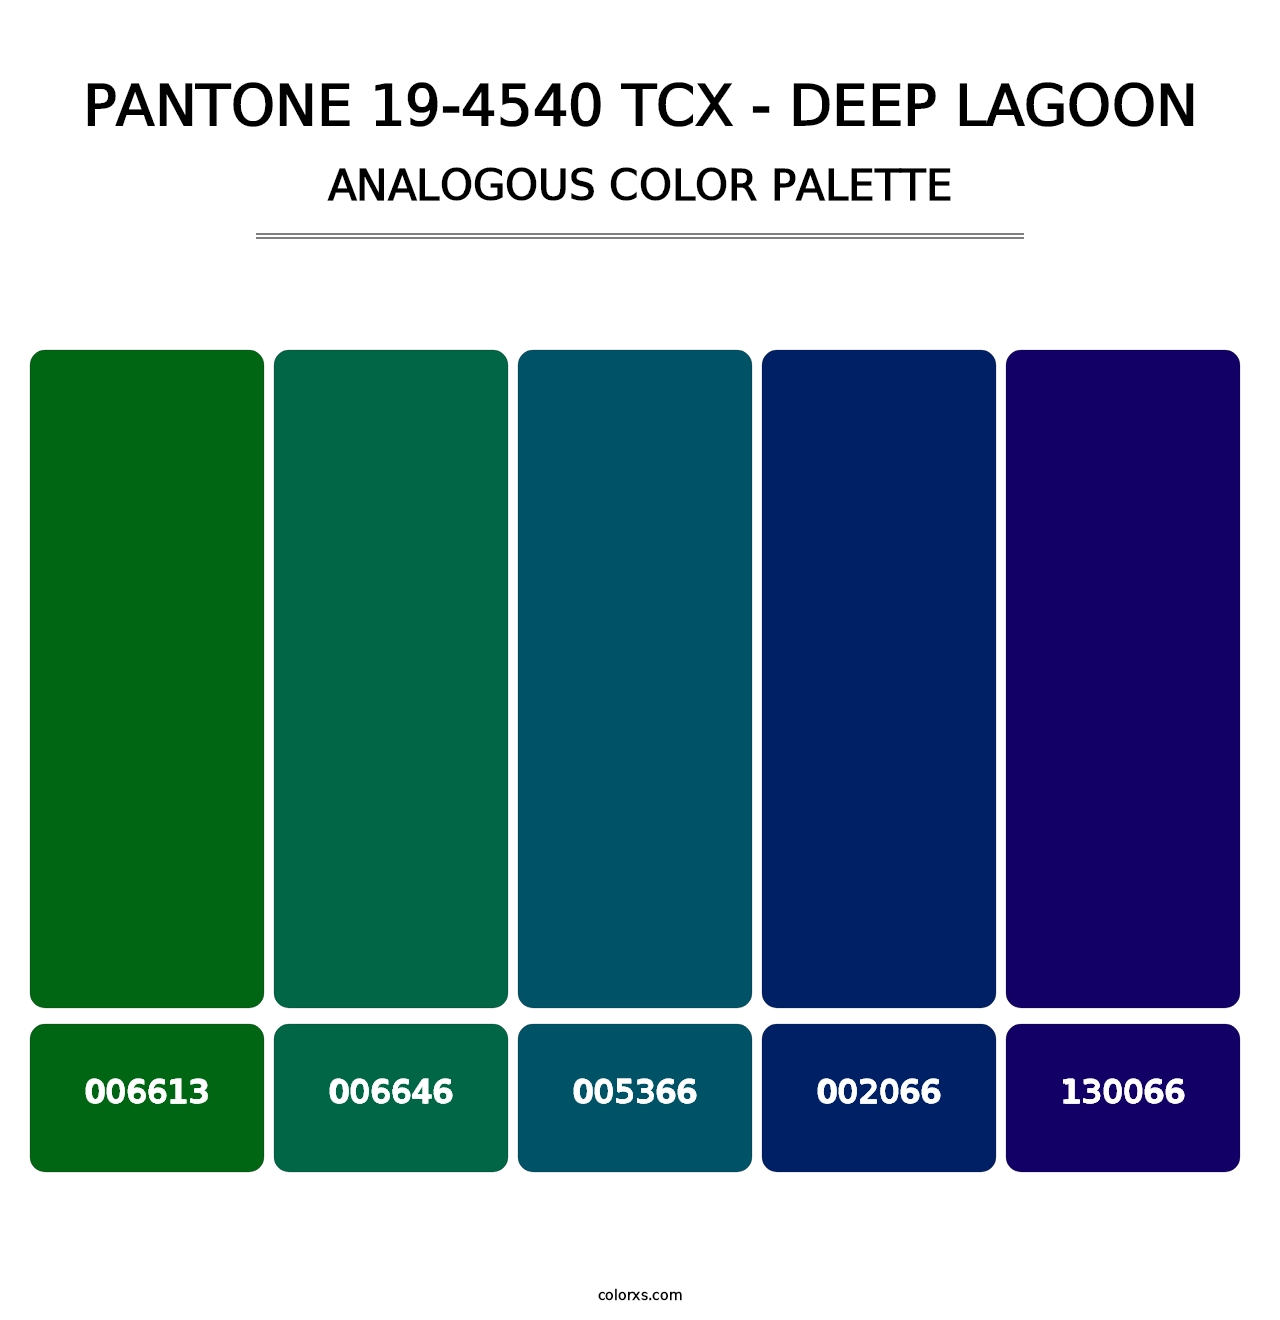 PANTONE 19-4540 TCX - Deep Lagoon - Analogous Color Palette